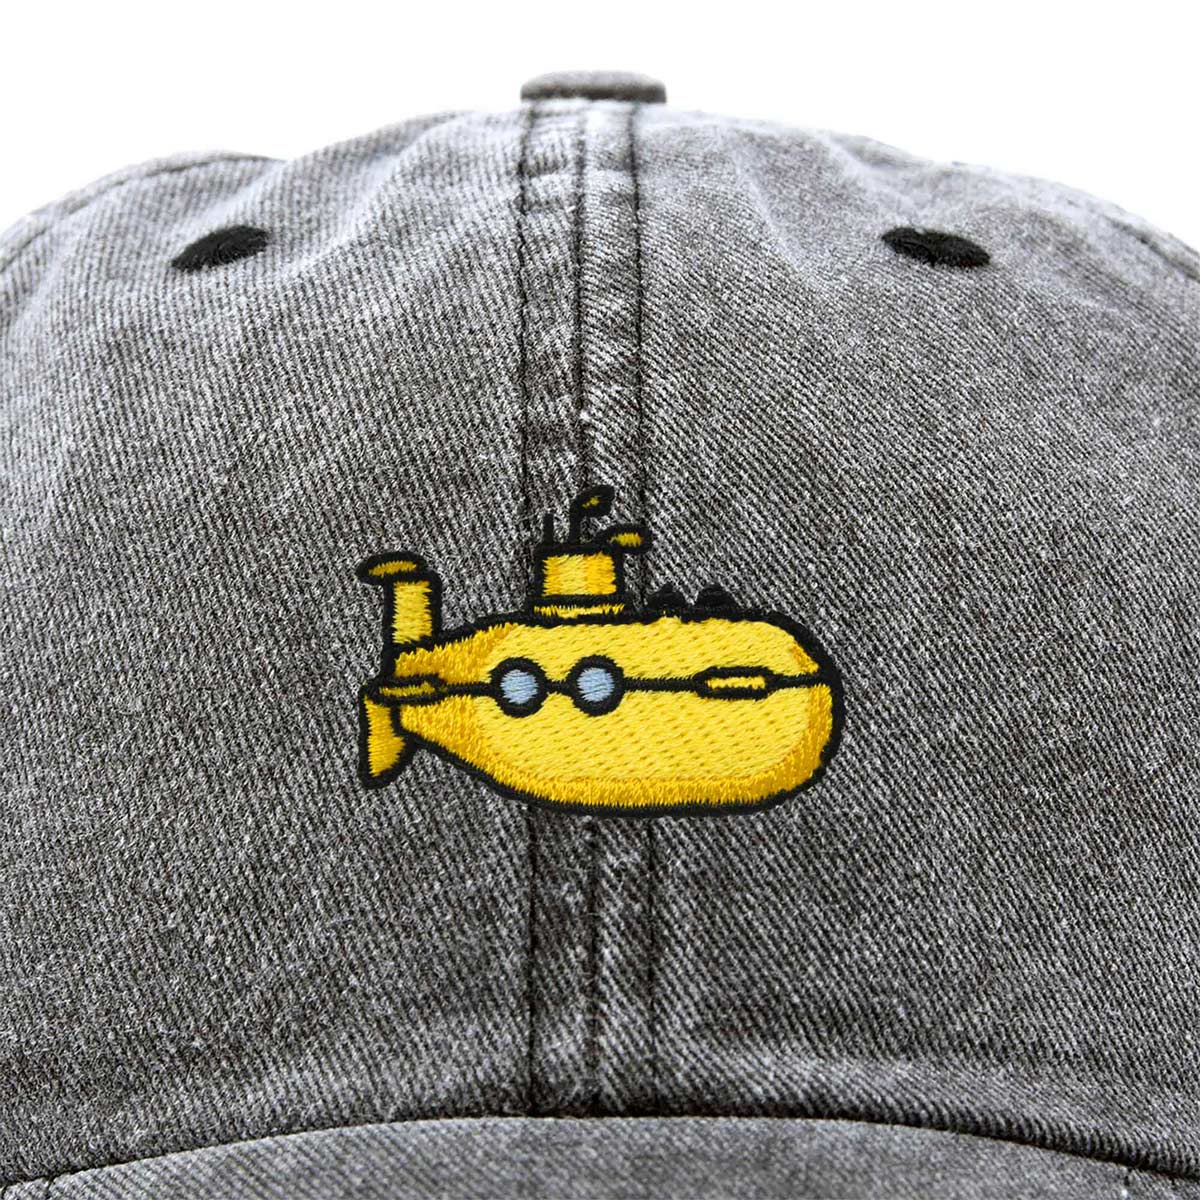 Dalix Submarine Hat